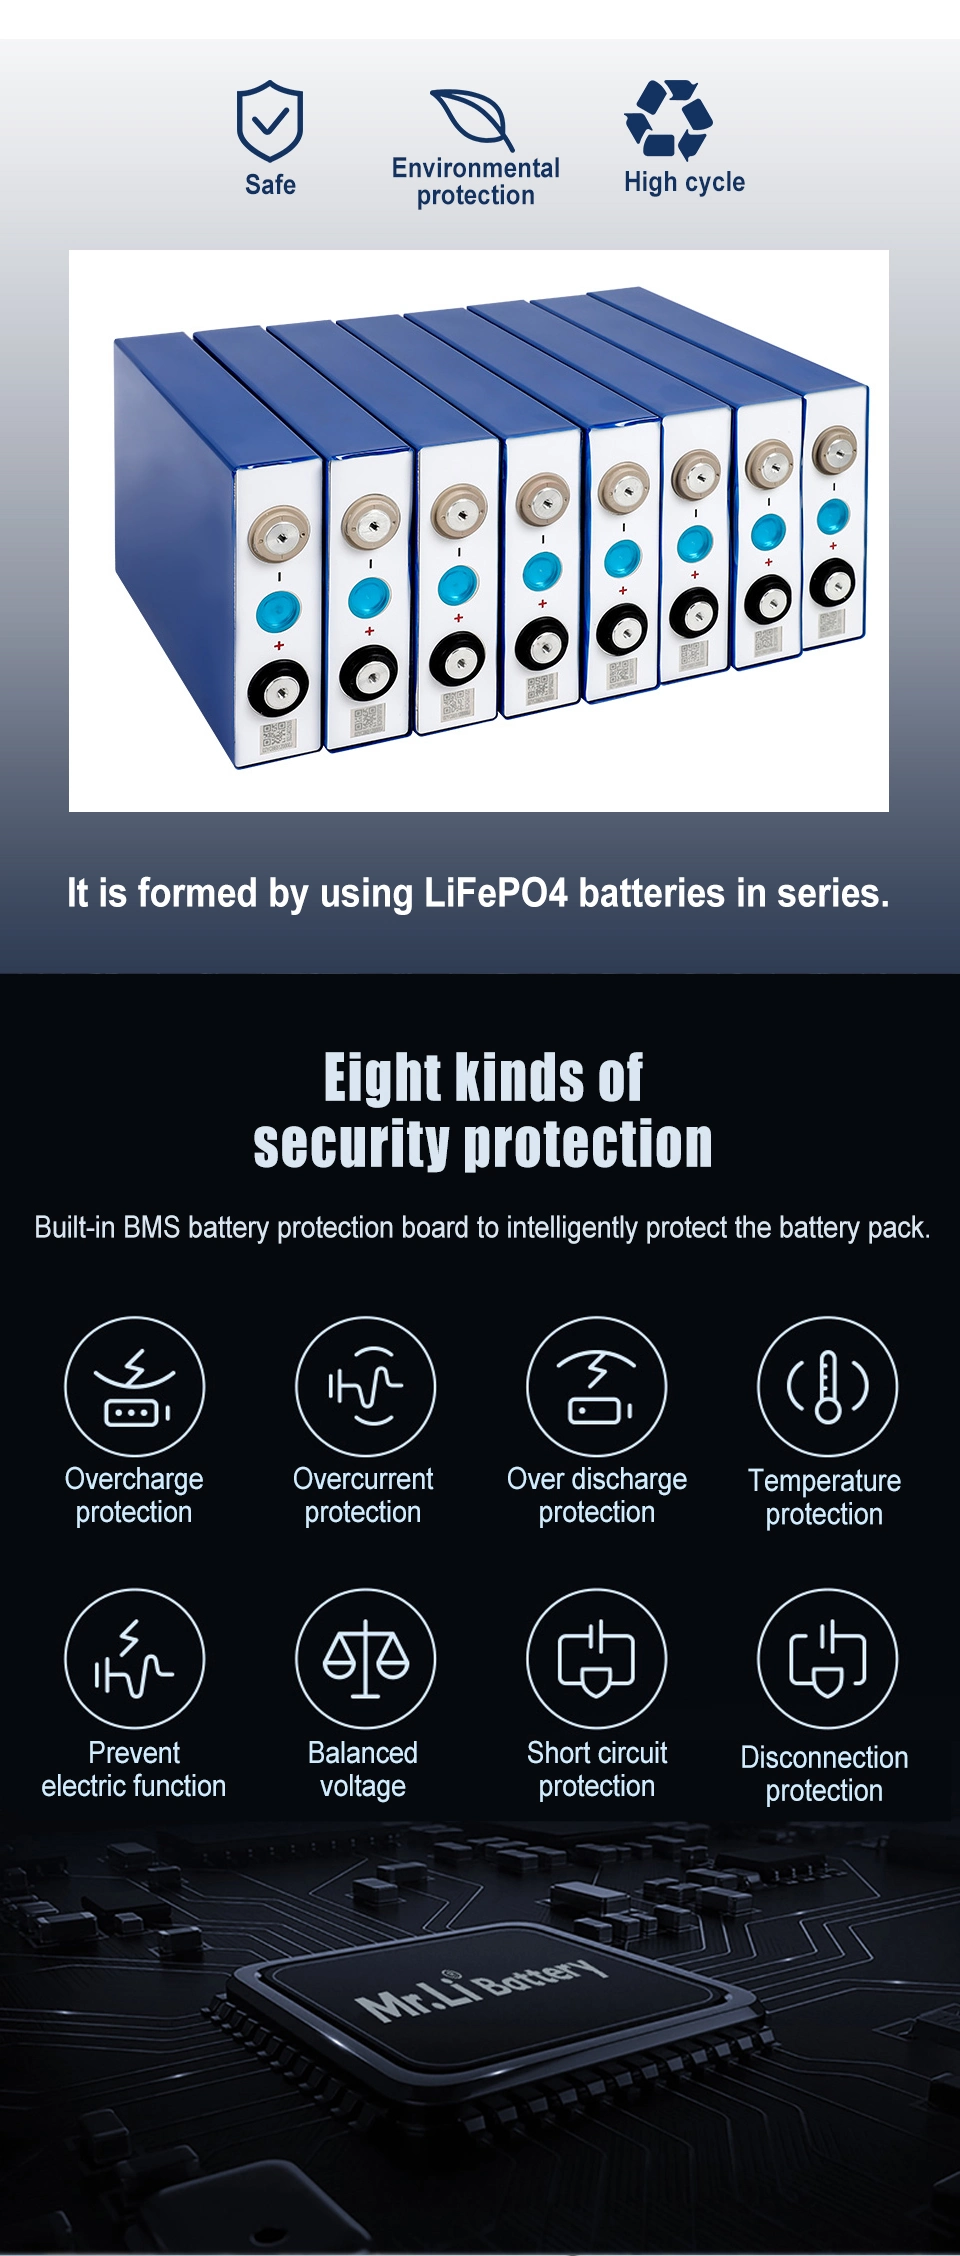 24V 105A Boats Battery LiFePO4 Lithium Battery for Boats/EV/RV/Trolly